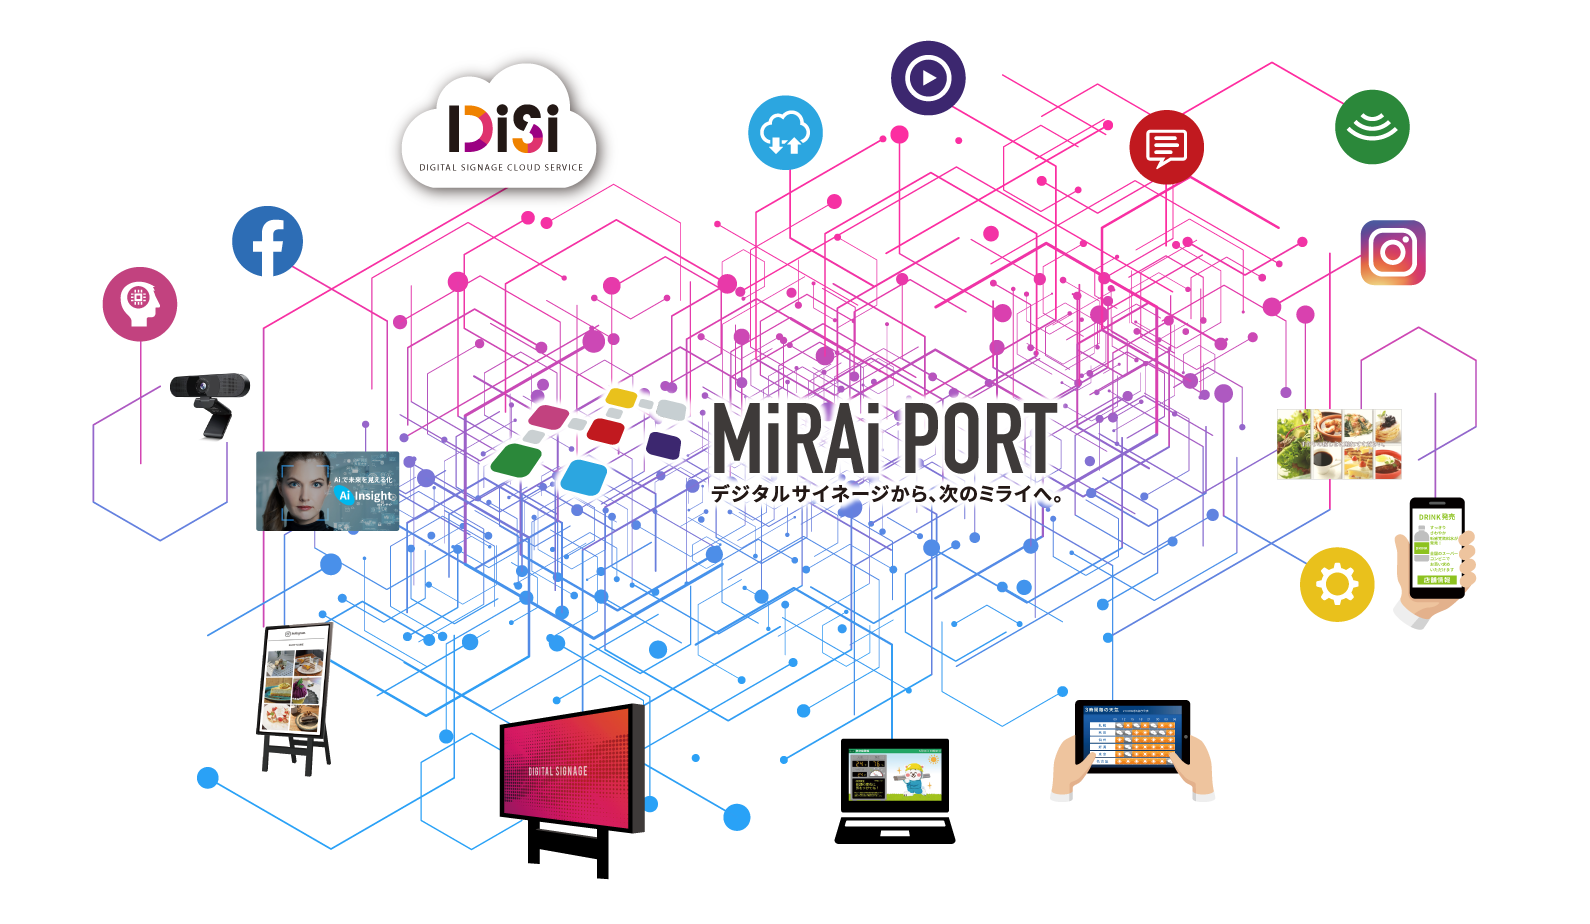 MiRAi PORT デジタルサイネージから、次のミライへ。